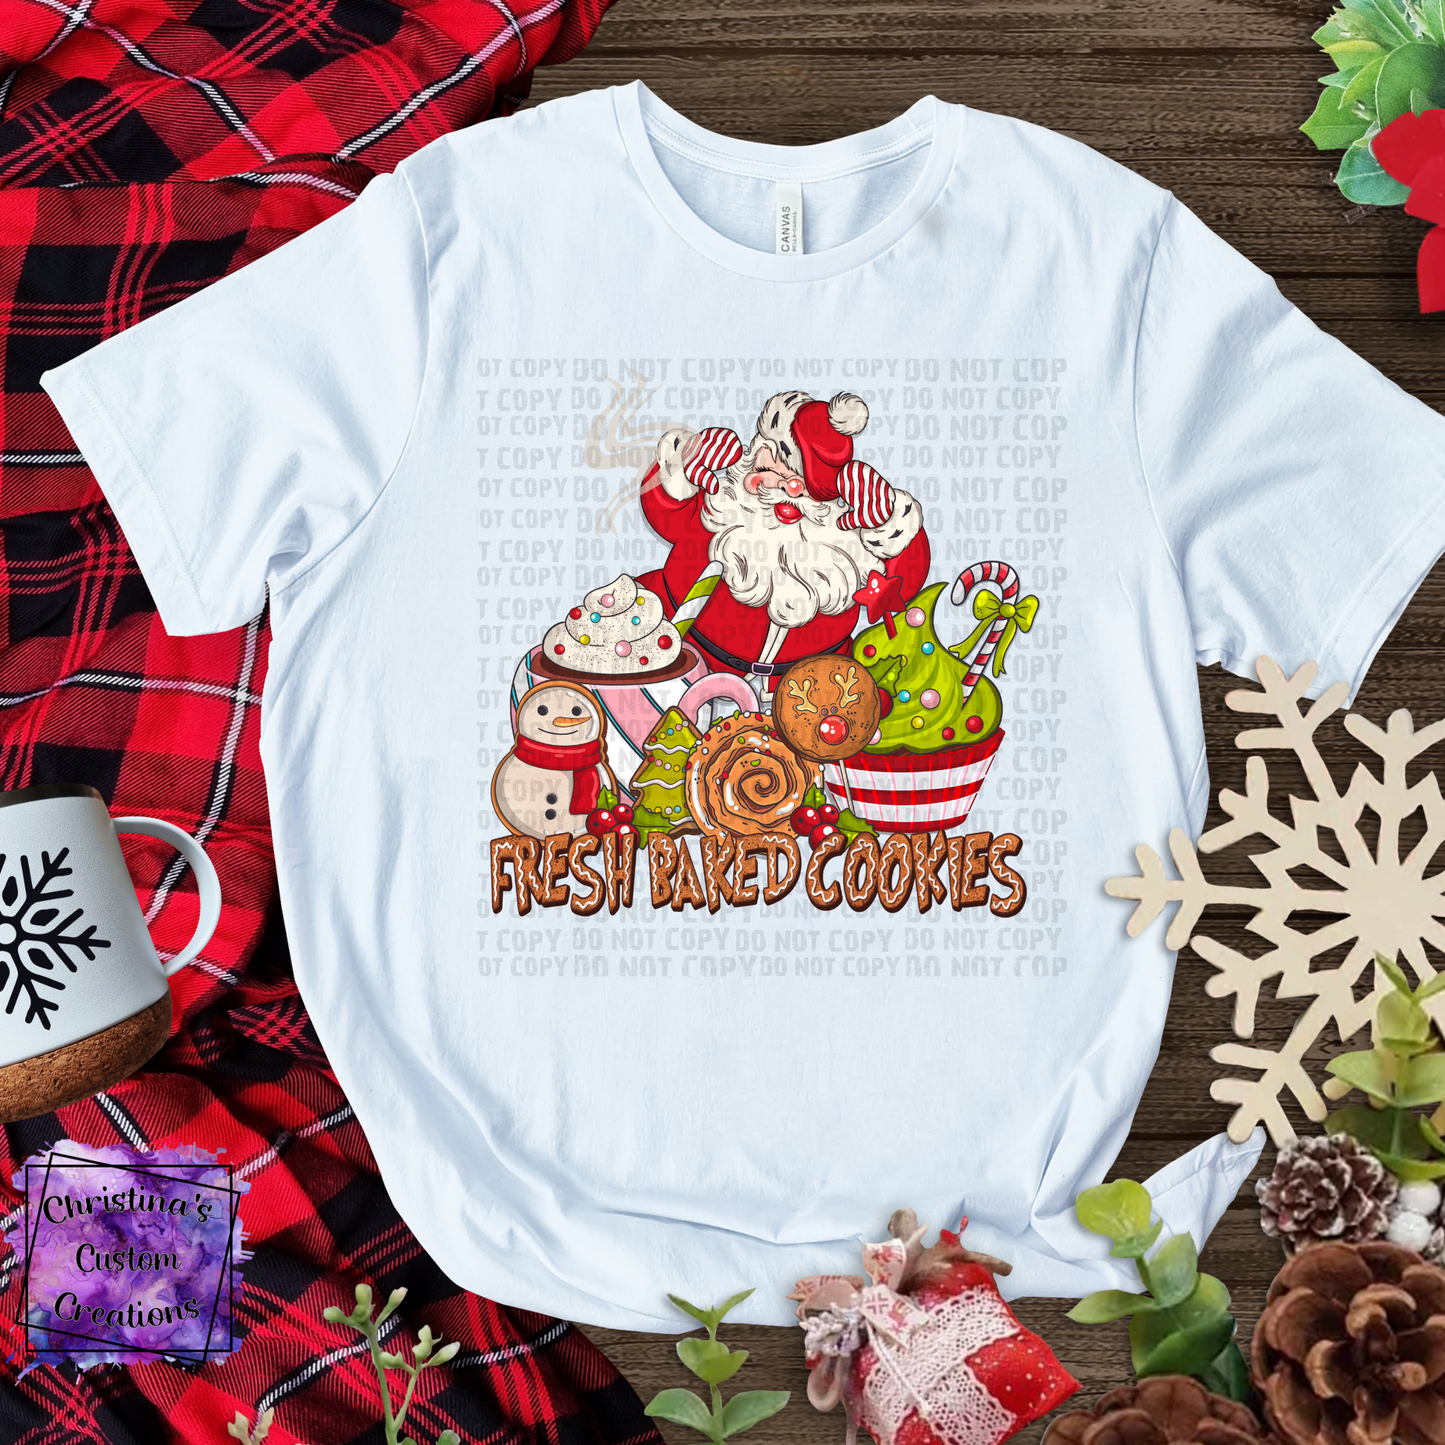 Fresh Baked Cookies T-Shirt | Trendy Christmas Shirt | Fast Shipping | Super Soft Shirts for Men/Women/Kid's